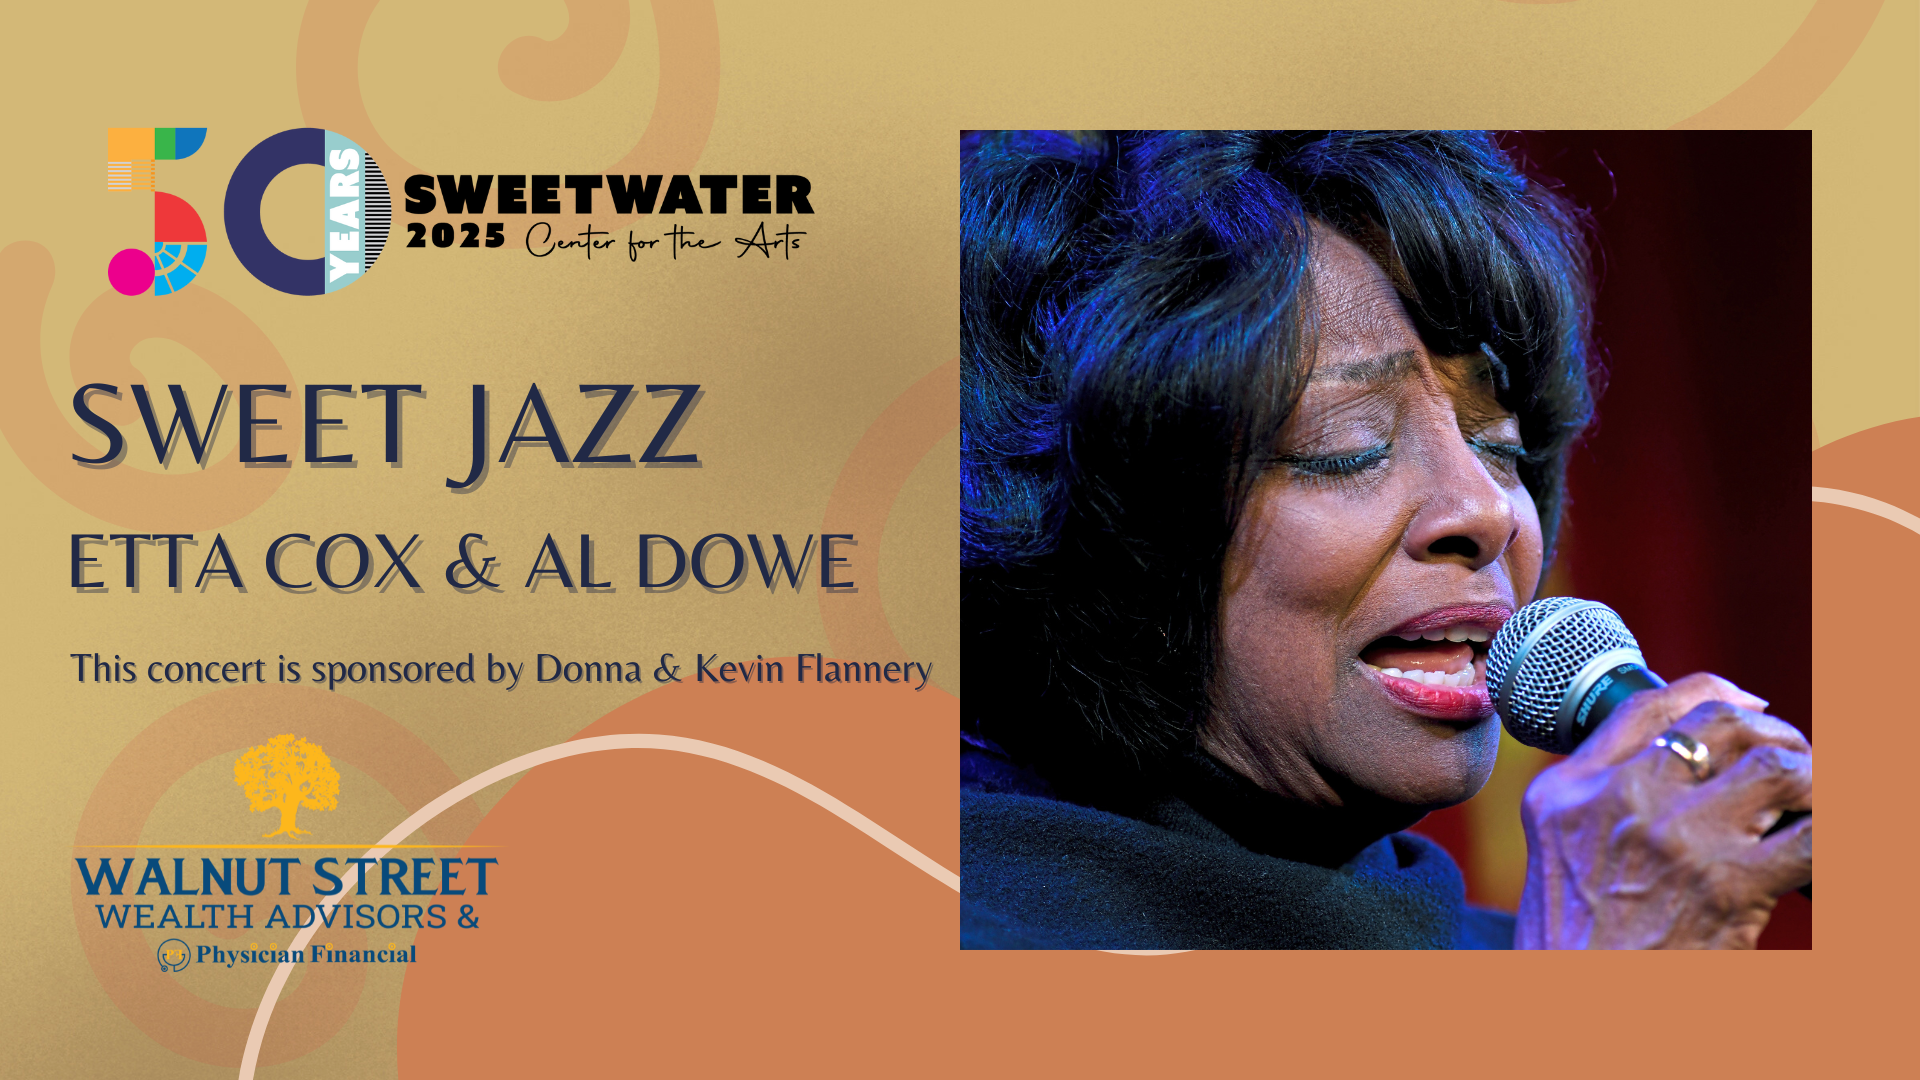 Sweet Jazz: Etta Cox & Al Dowe